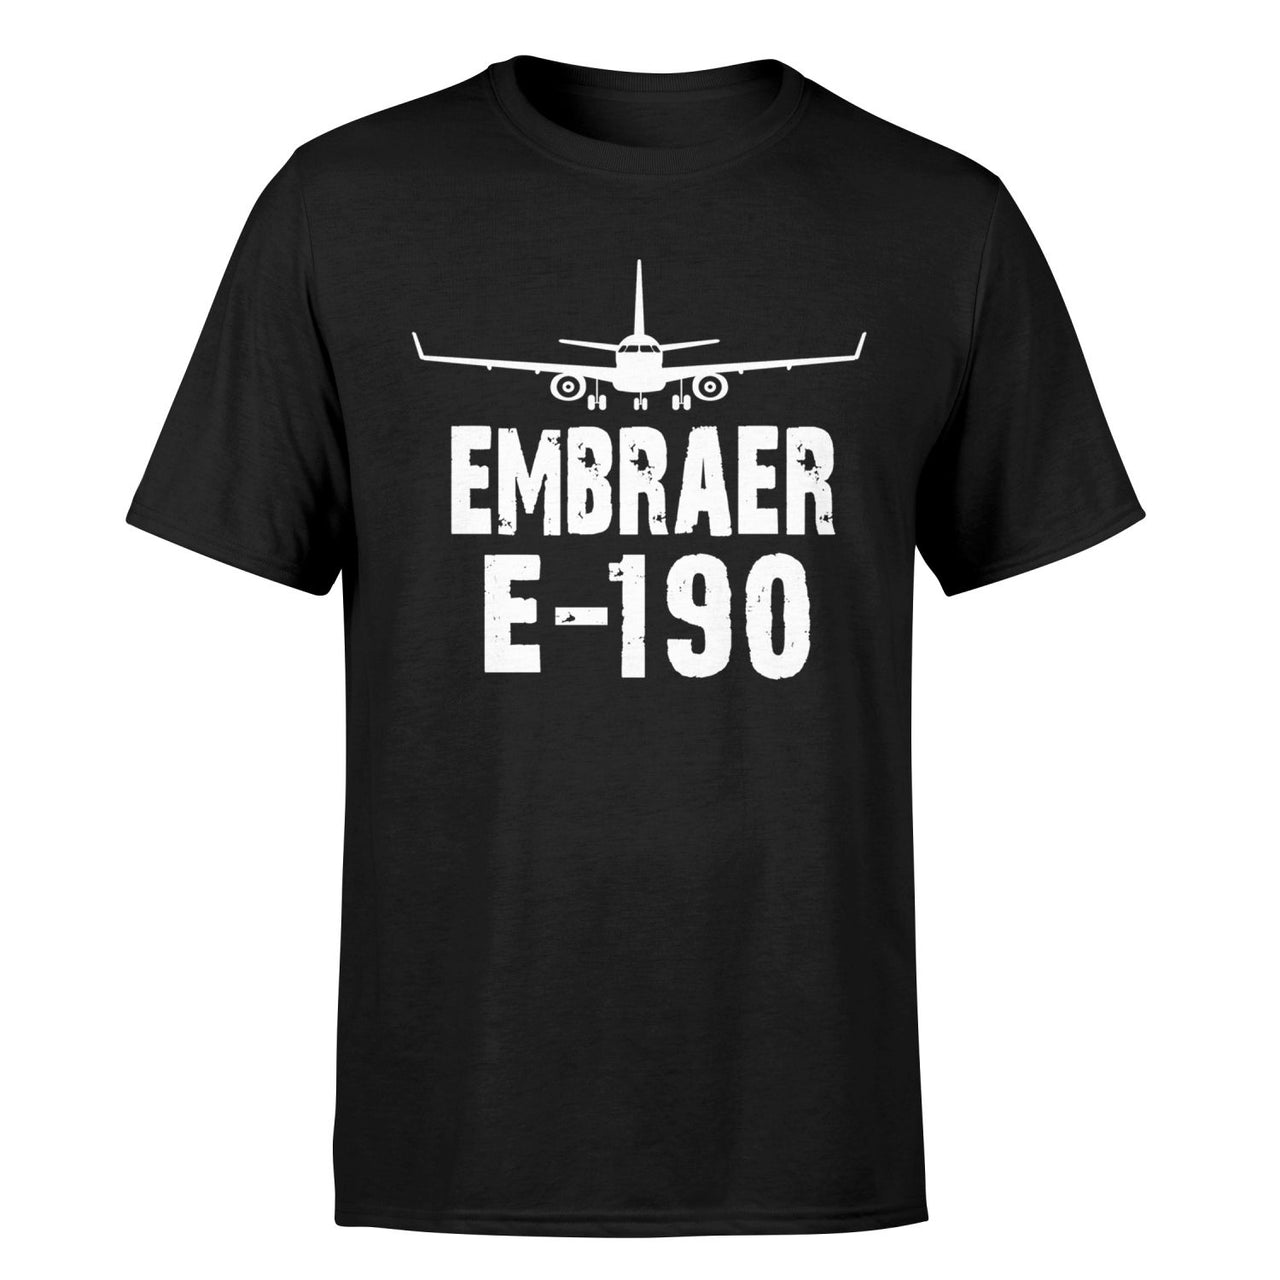 Embraer E-190 & Plane Designed T-Shirts